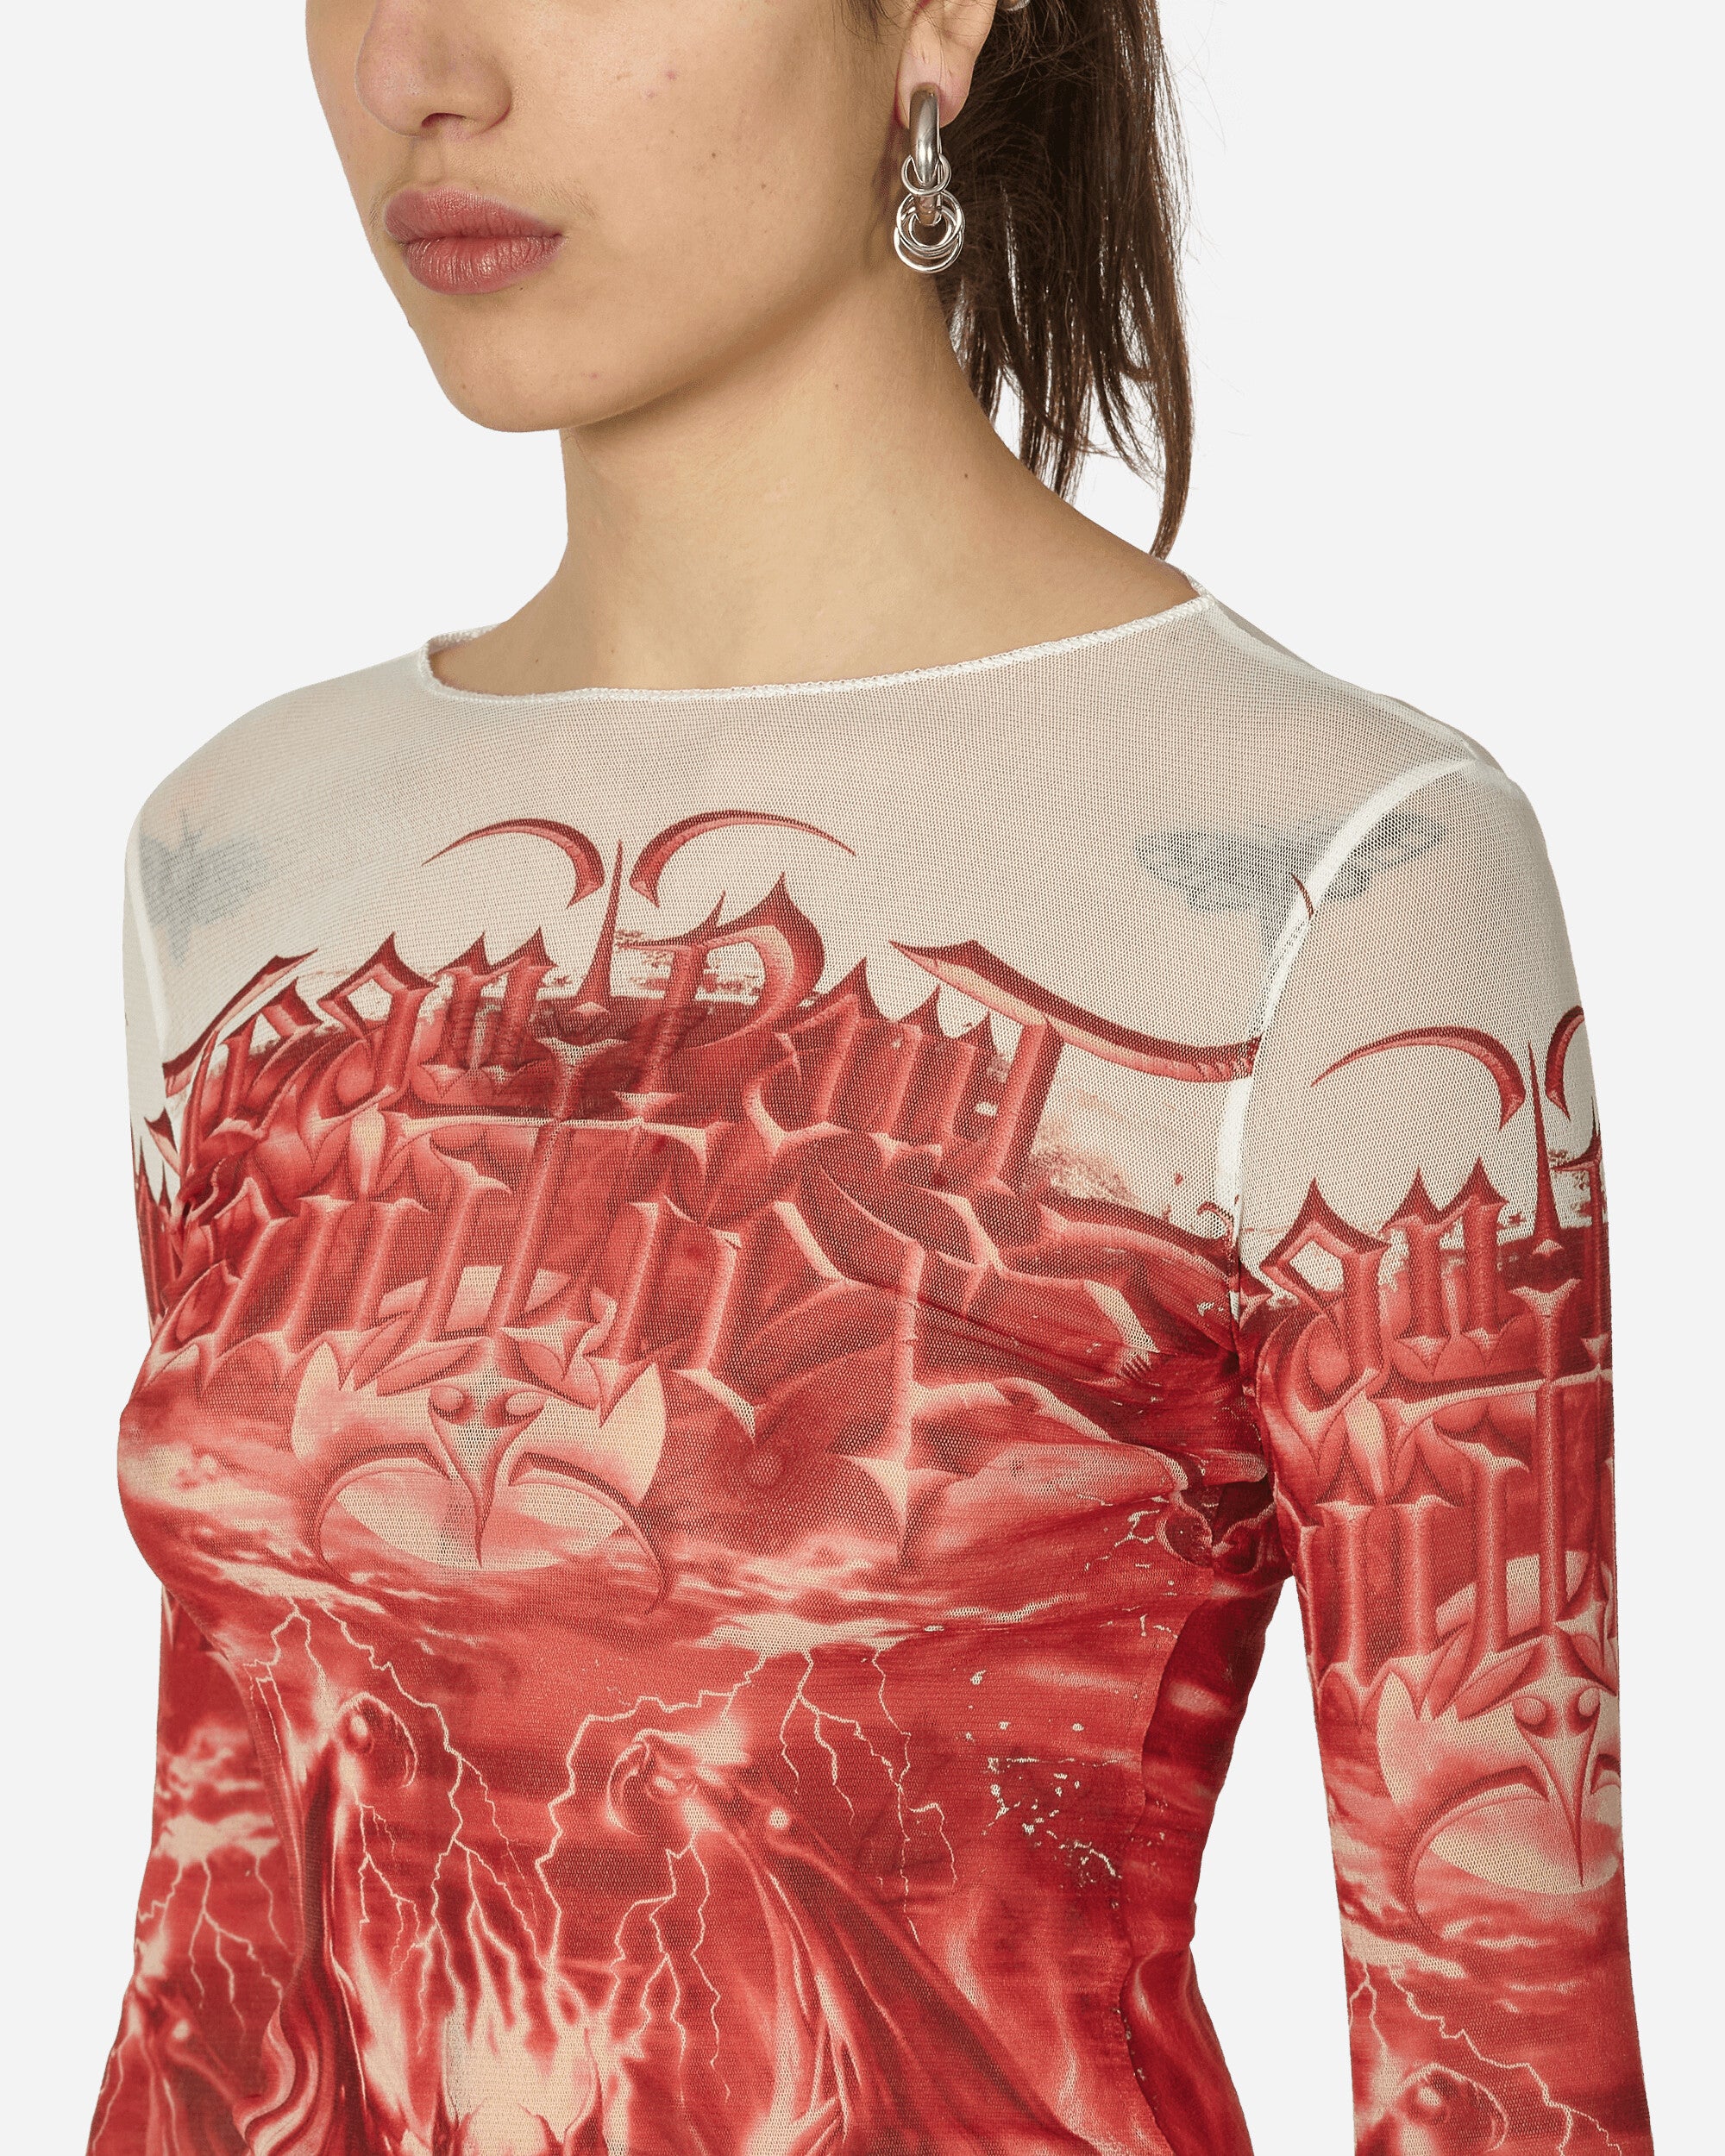 Jean Paul Gaultier Wmns Mesh Long Sleeves Top Printed Diablo White/Red T-Shirts Longsleeve U-TO137-T546 0130